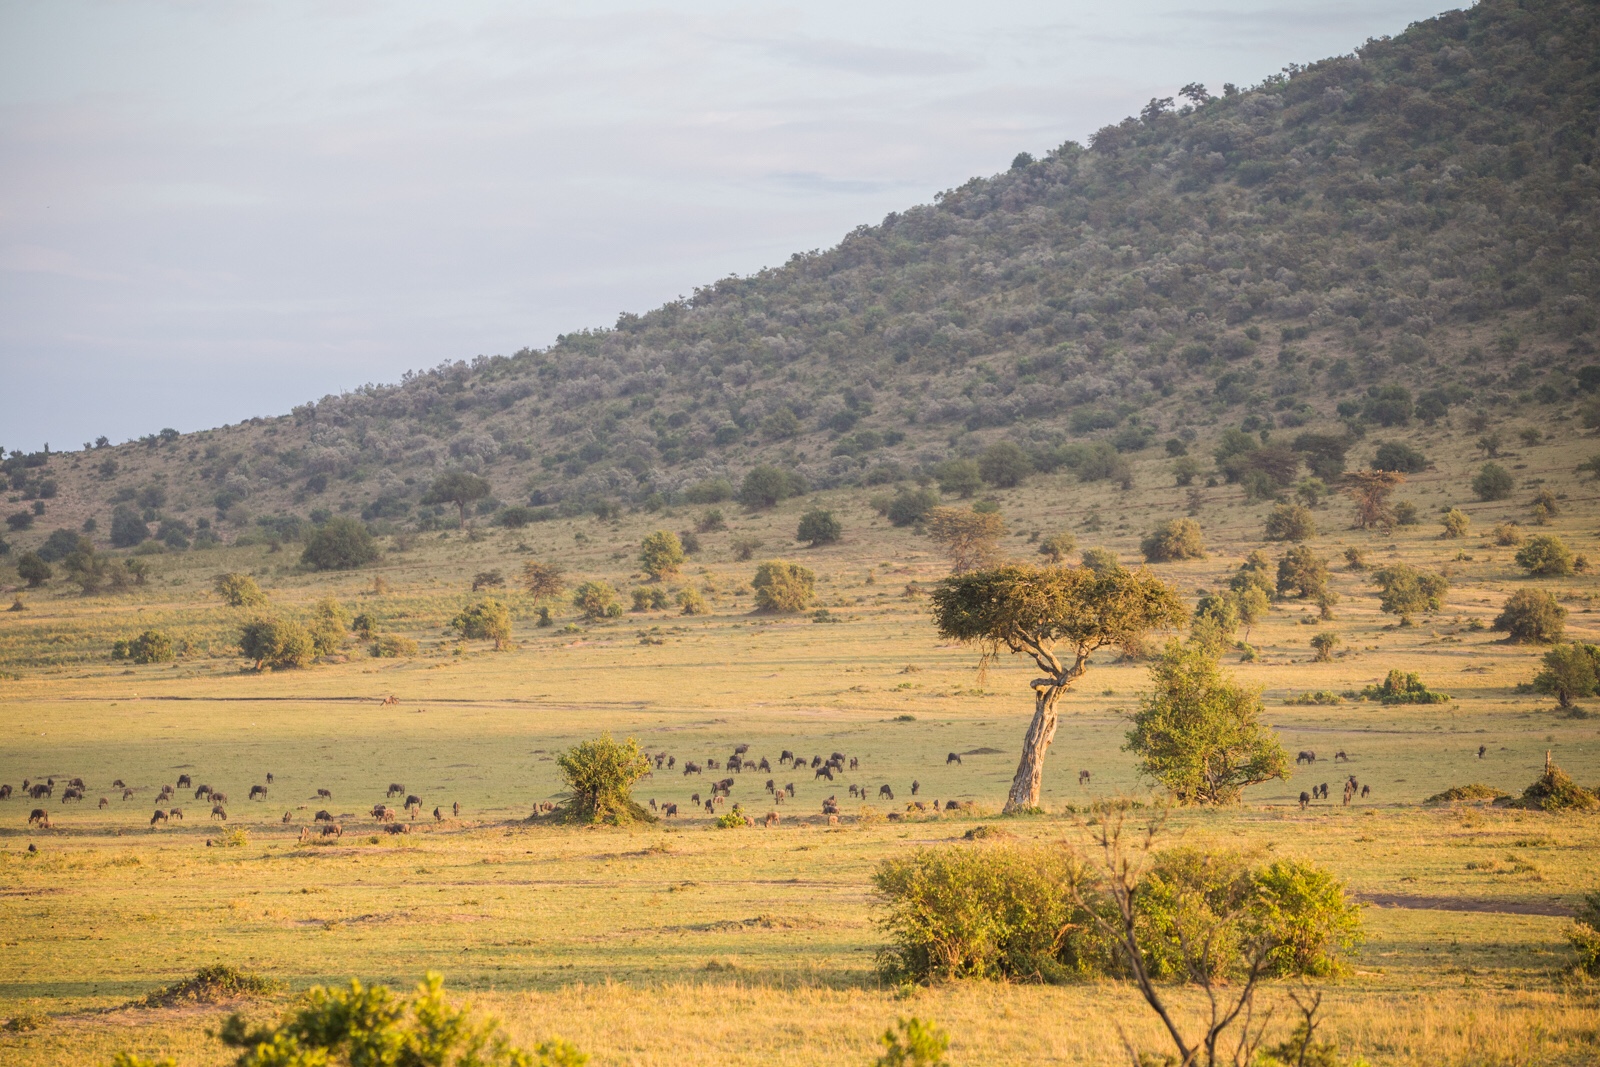 Endless savannah with grass and trees in the Maasai Mara.